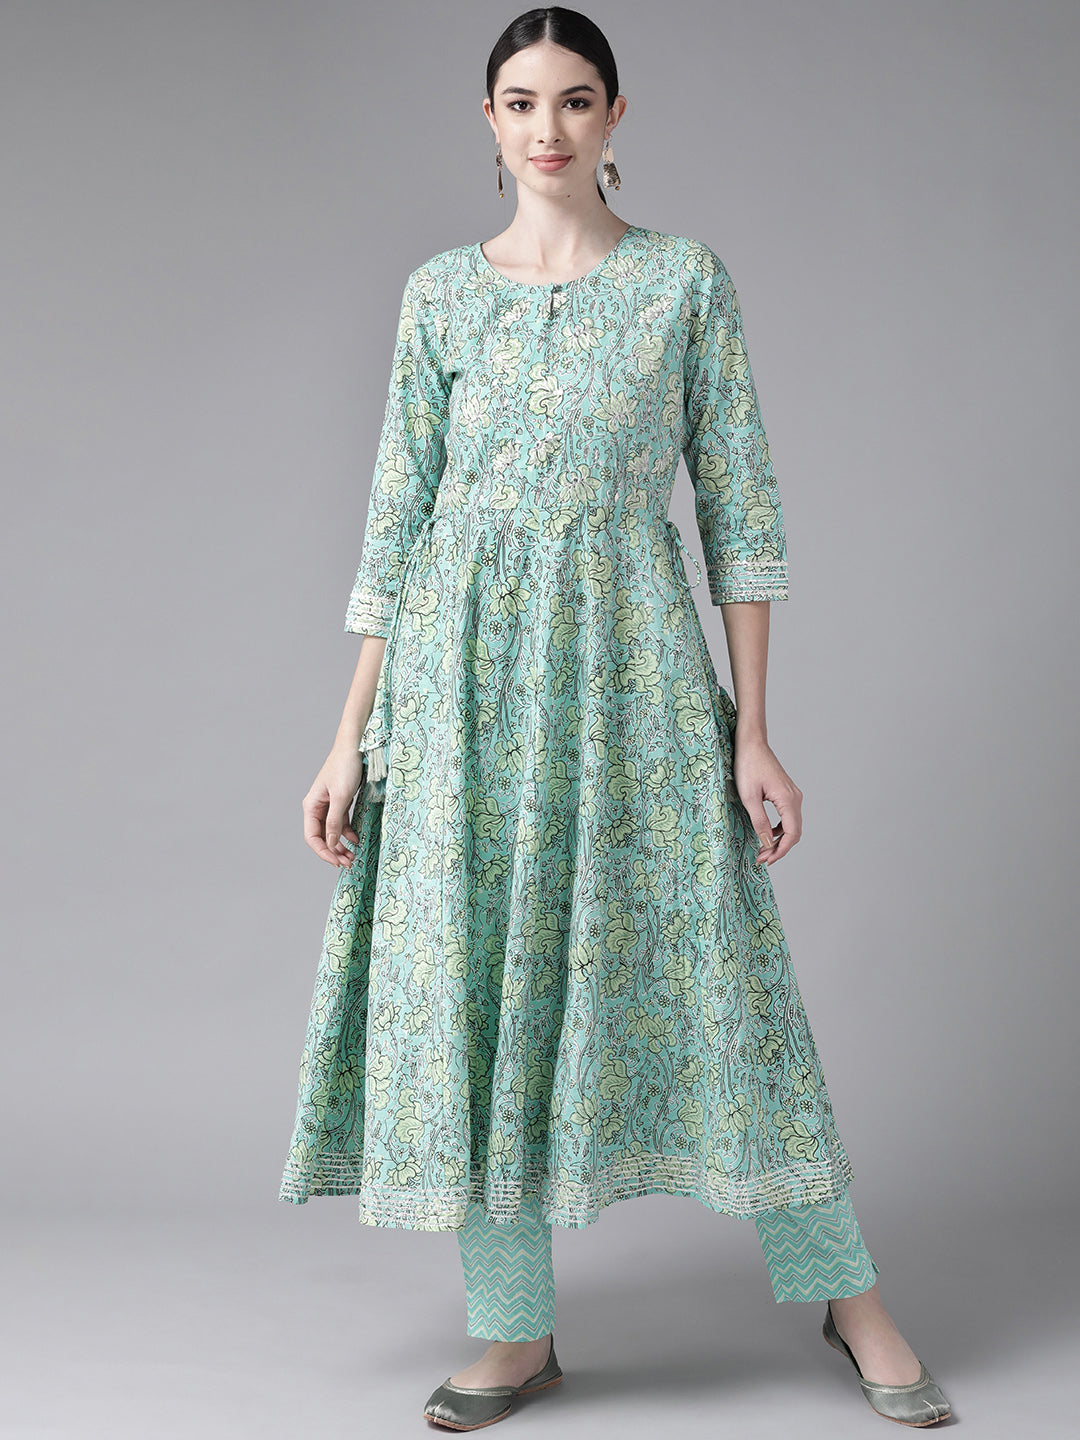 Ishin Women's Cotton Blend Sea Green Embroidered Anarkali Kurta Trouser Set